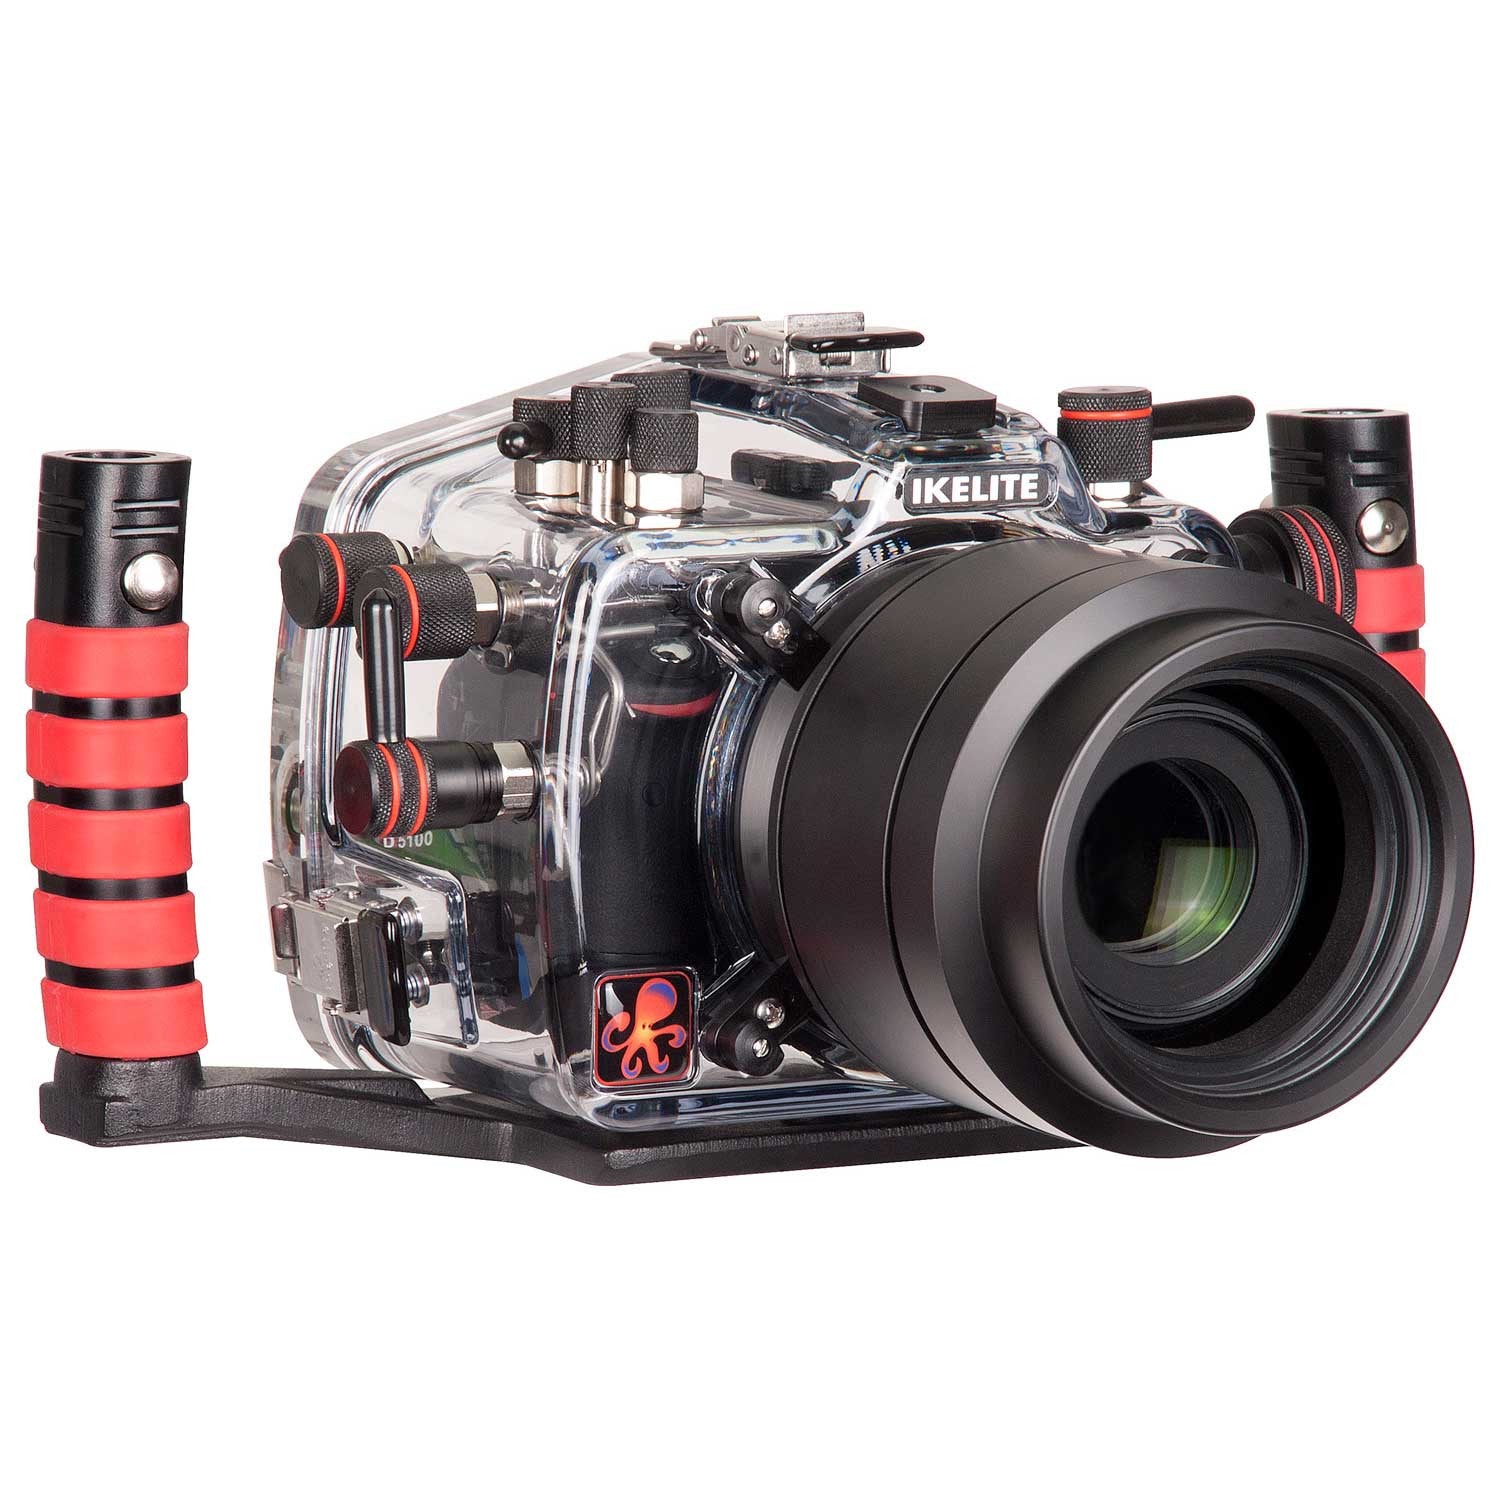 200FL Underwater TTL Housing for Nikon D5100 DSLR Cameras